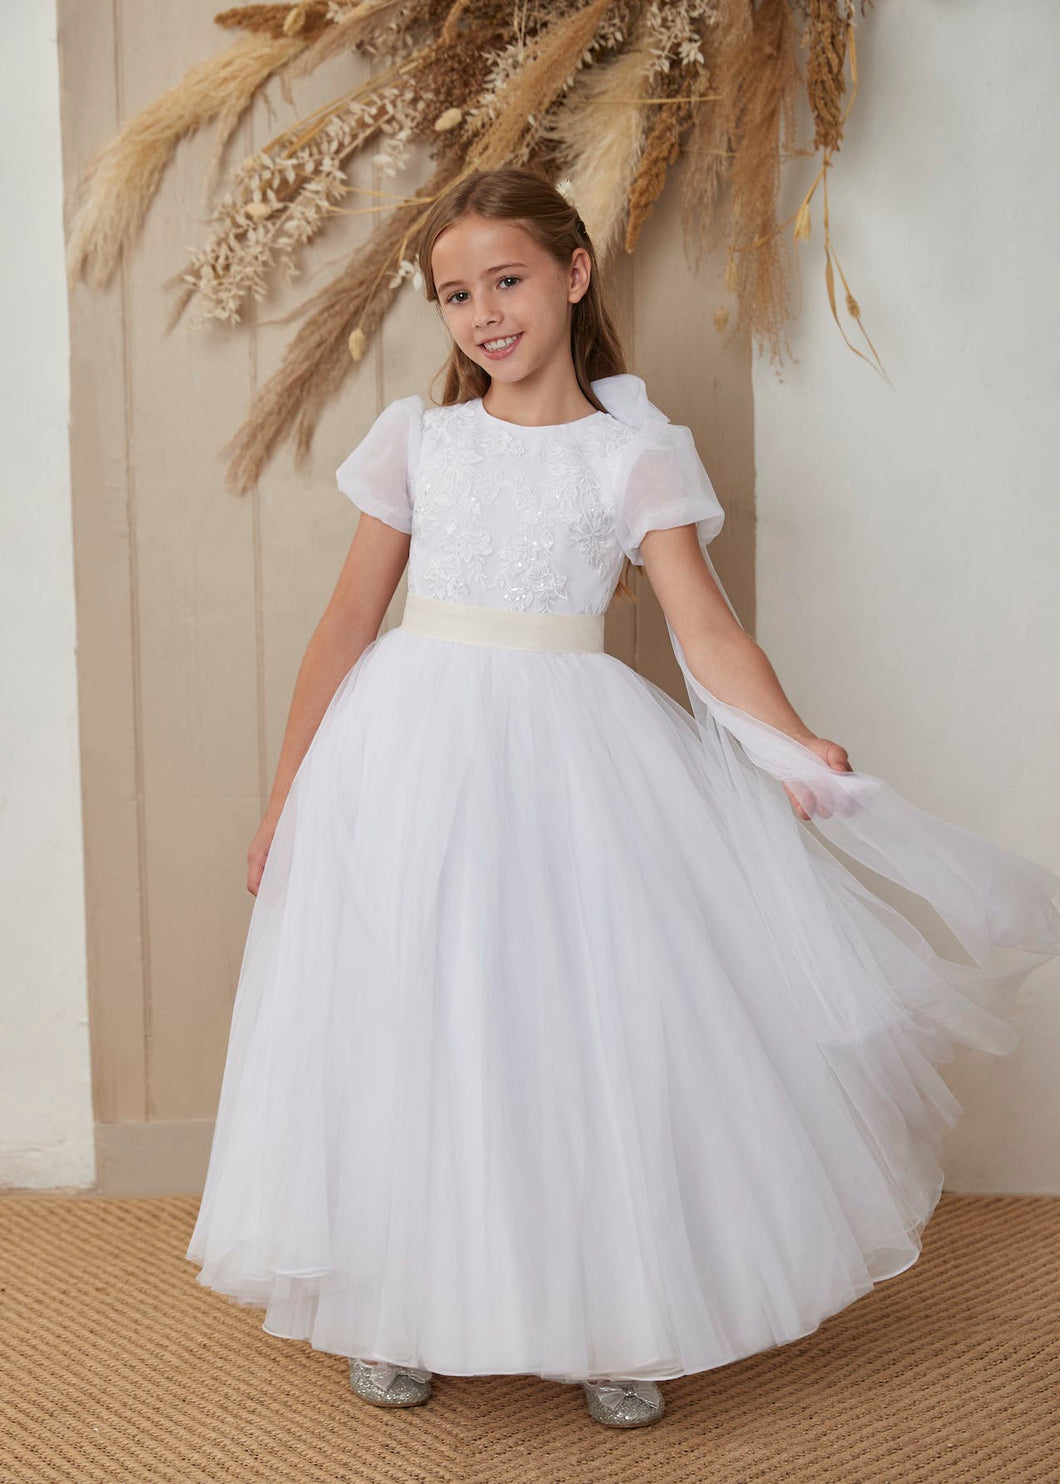 SALE COMMUNION DRESS Chloe Belle Girls White Communion Dress:- CB3307 Age 9